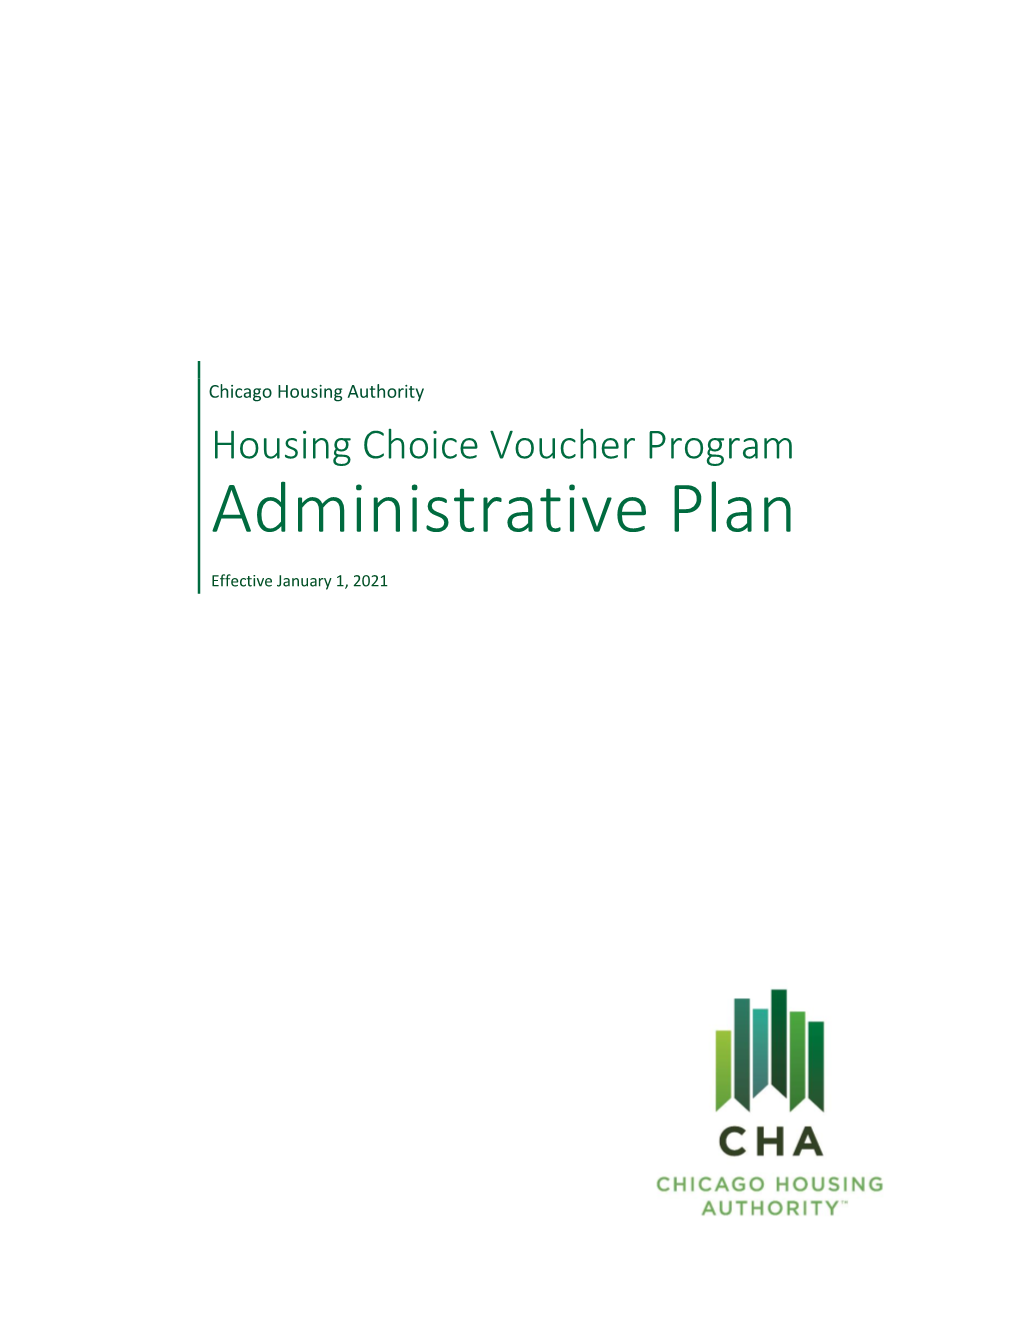 Administrative Plan